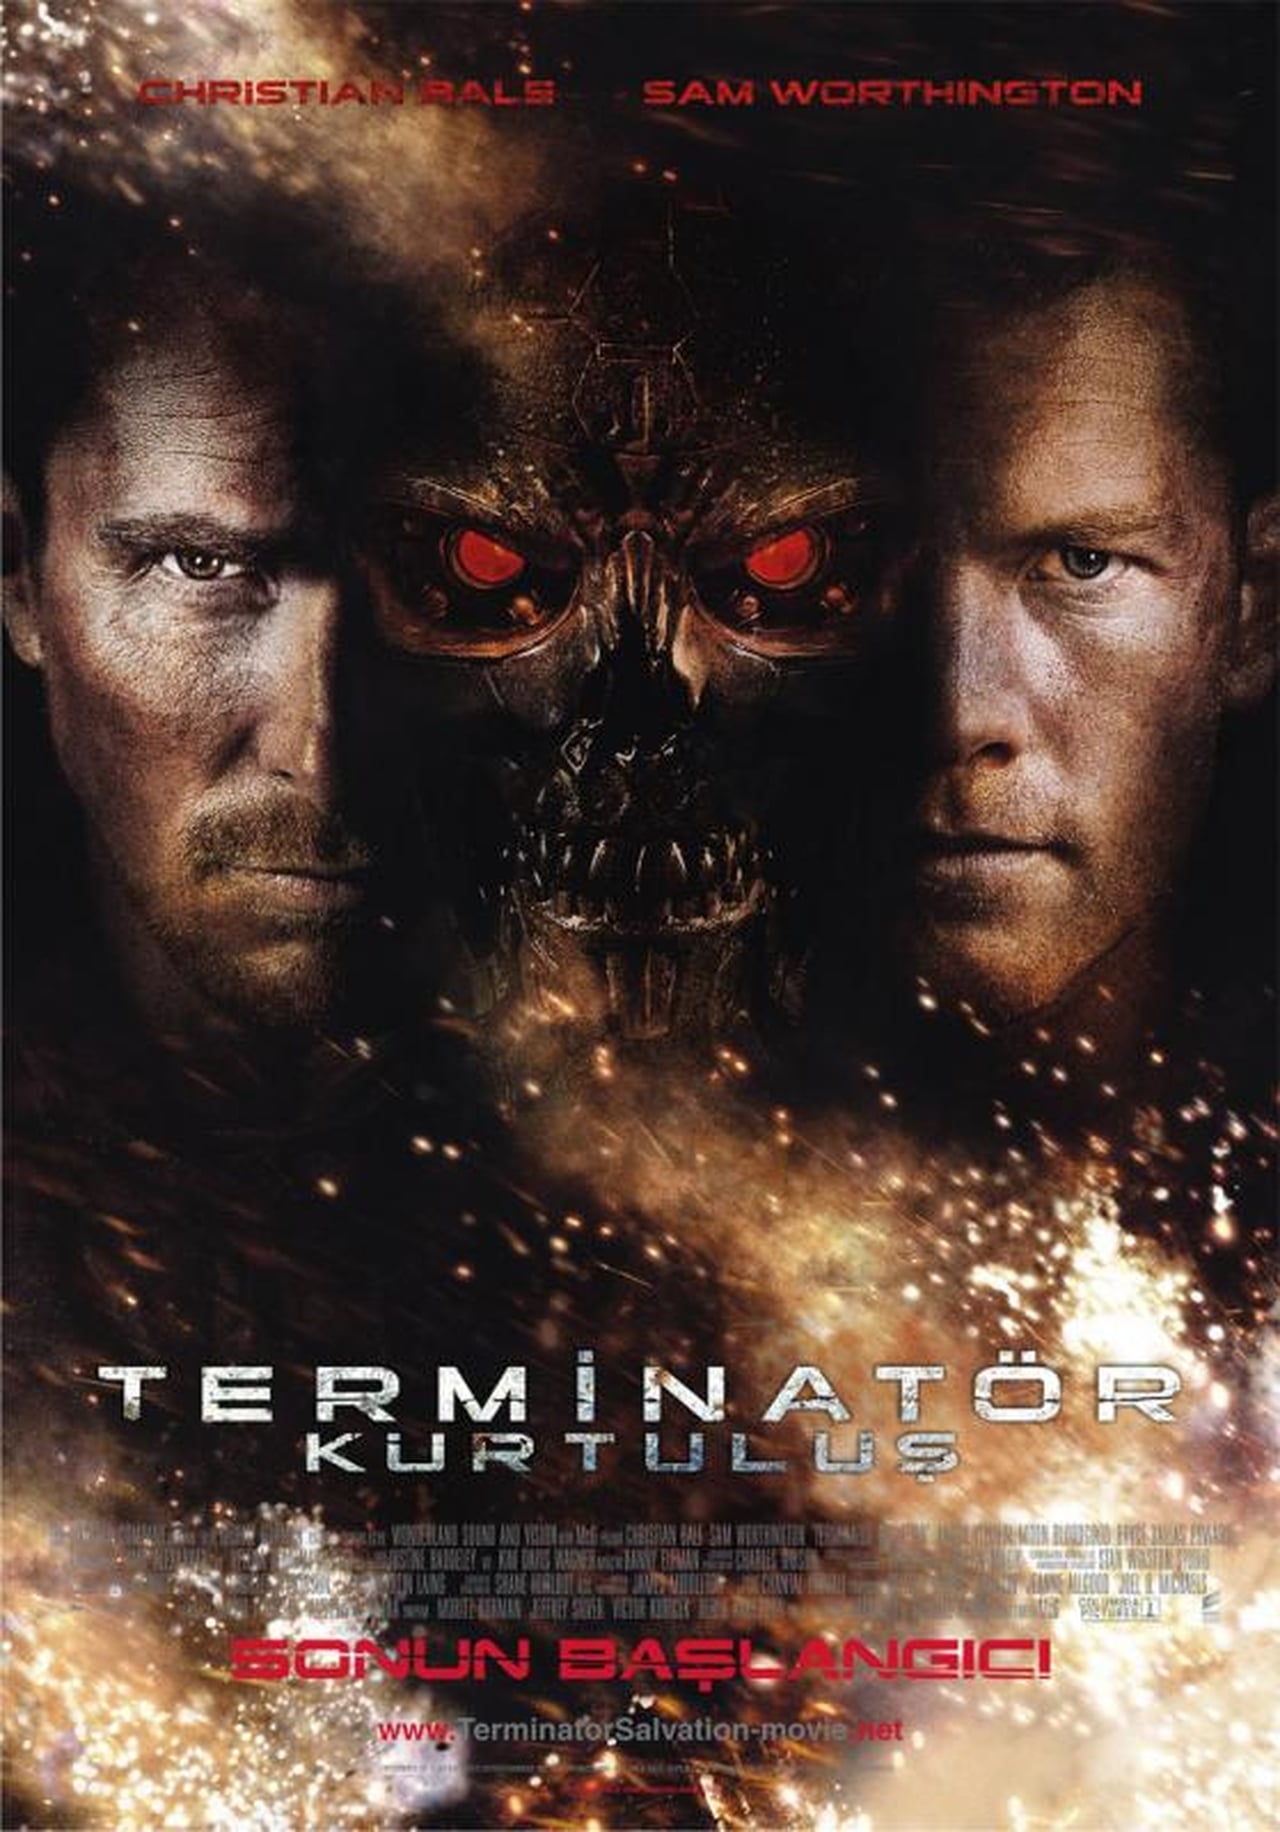 Terminator Salvation (2009) Theatrical Cut 384Kbps 23.976Fps 48Khz 5.1Ch BluRay Turkish Audio TAC